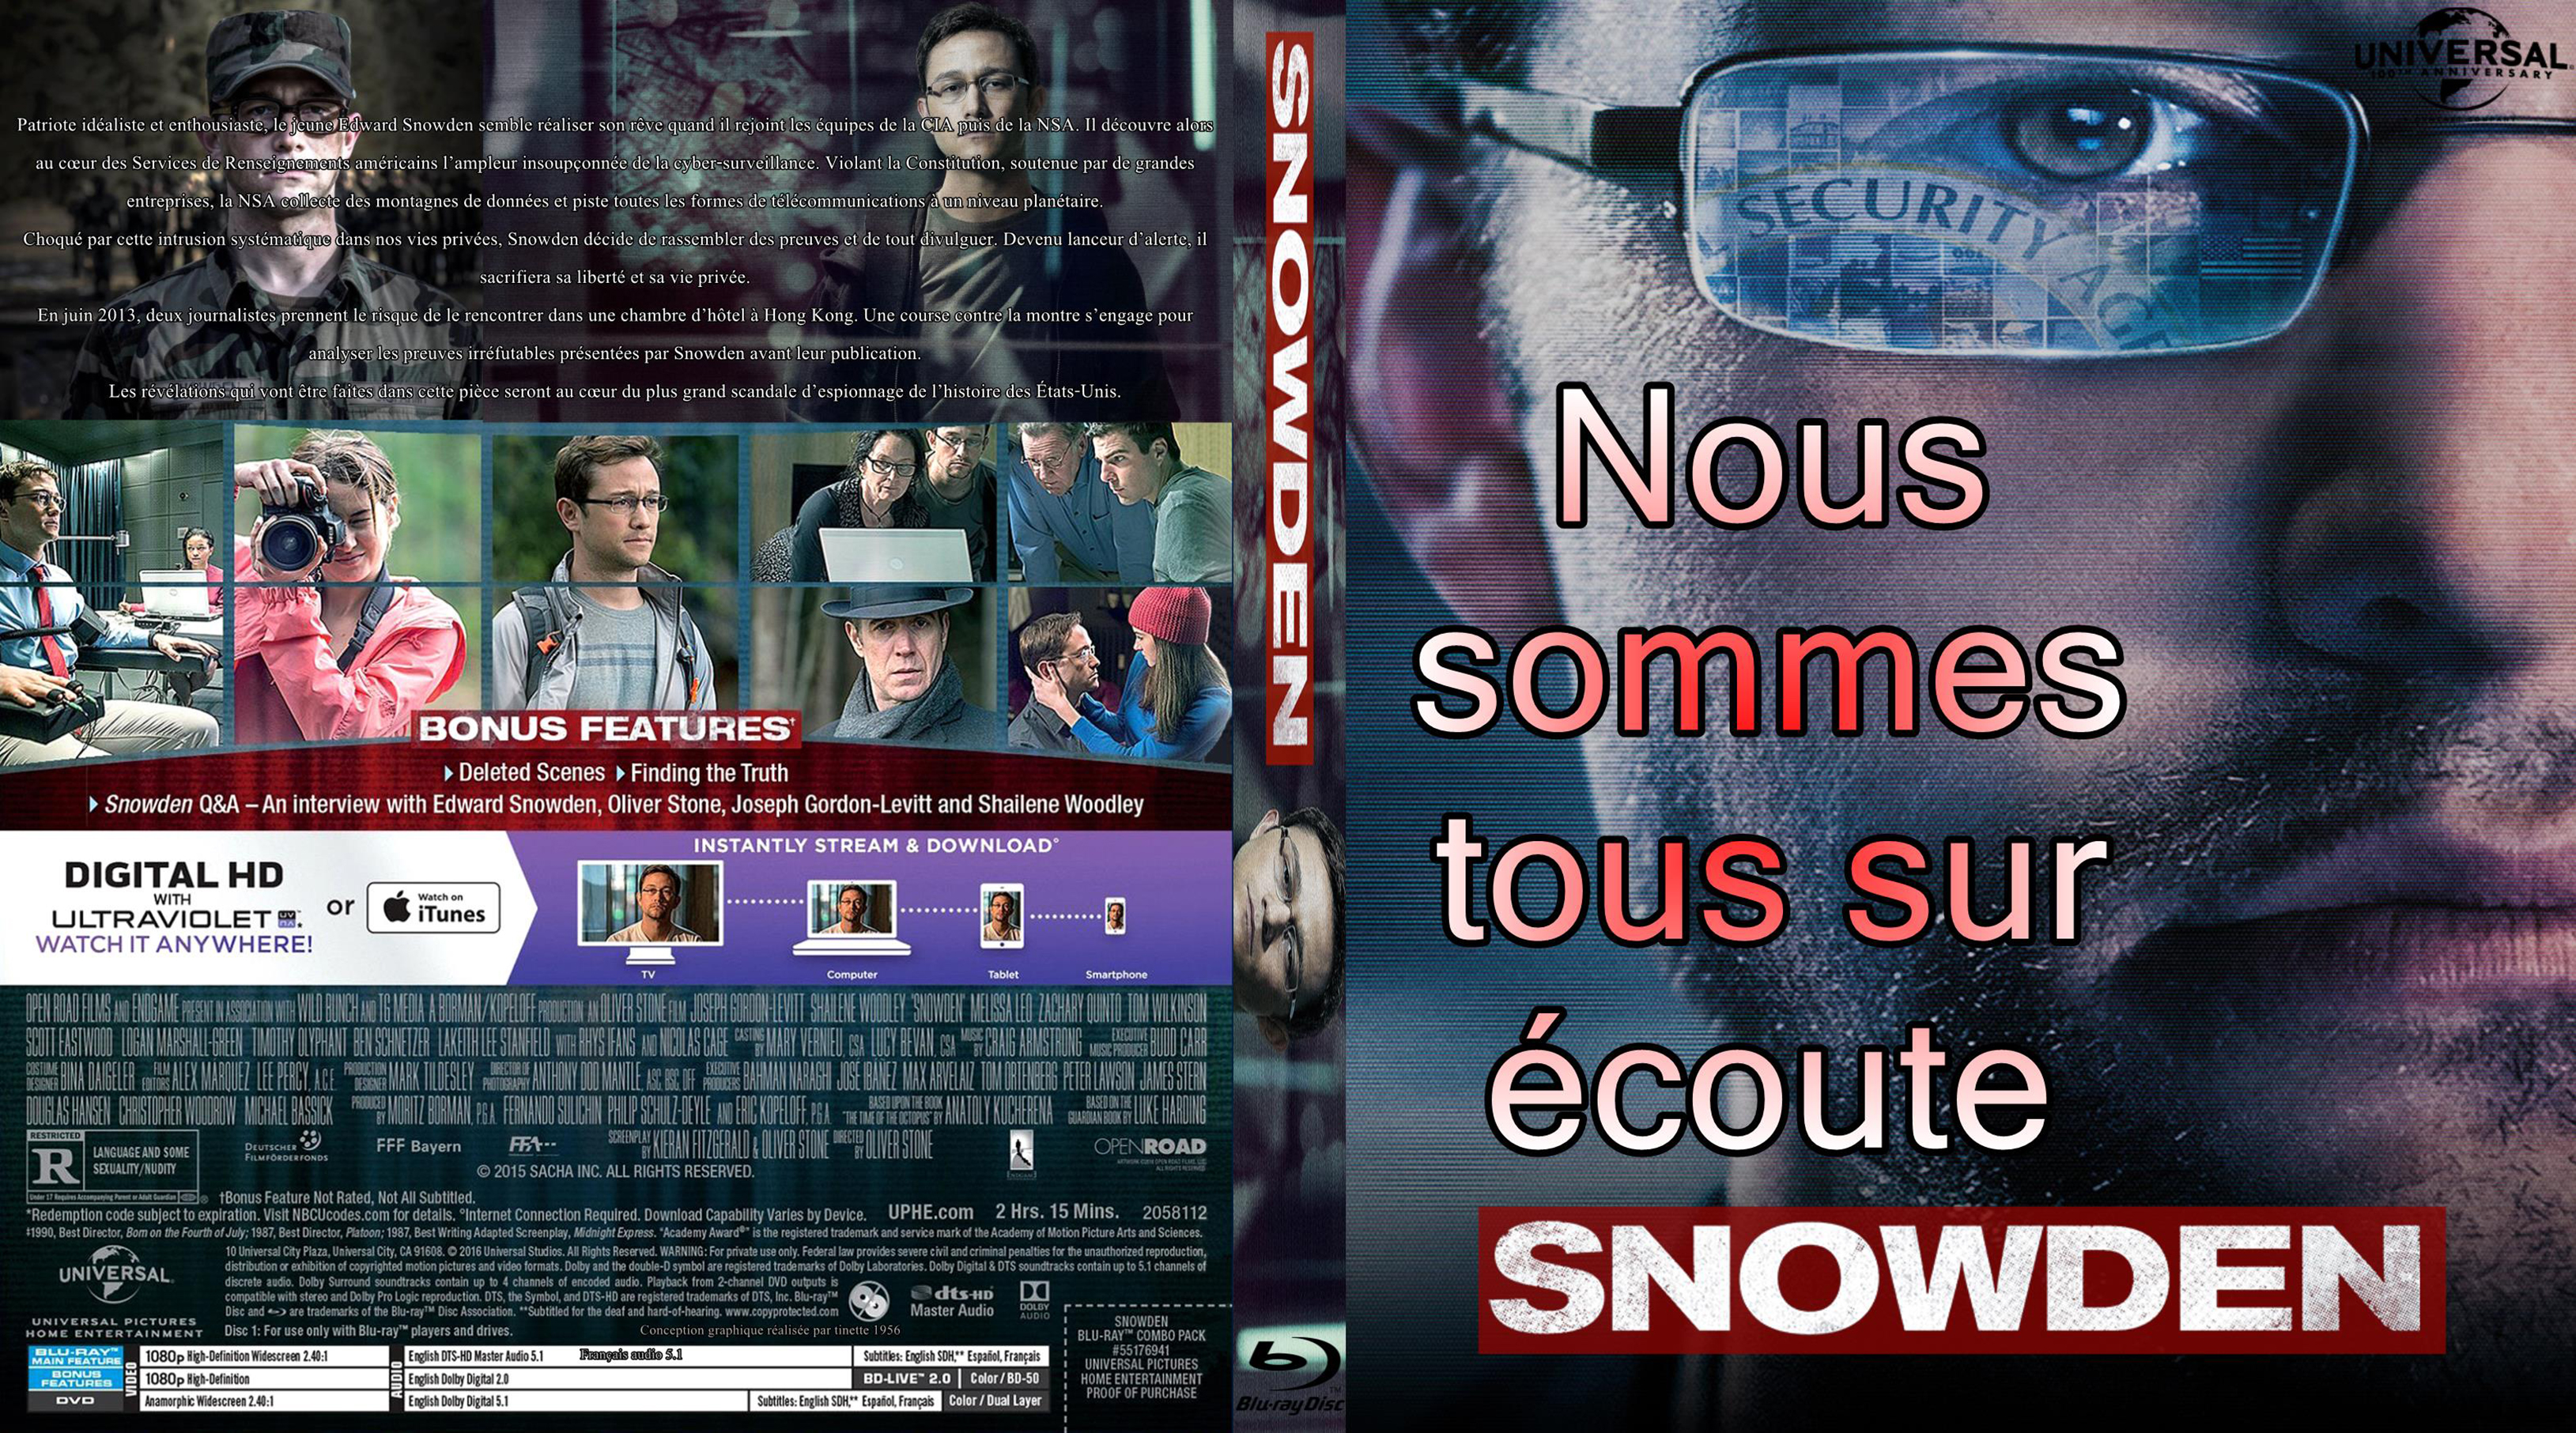 Jaquette DVD Snowden custom (BLU-RAY)